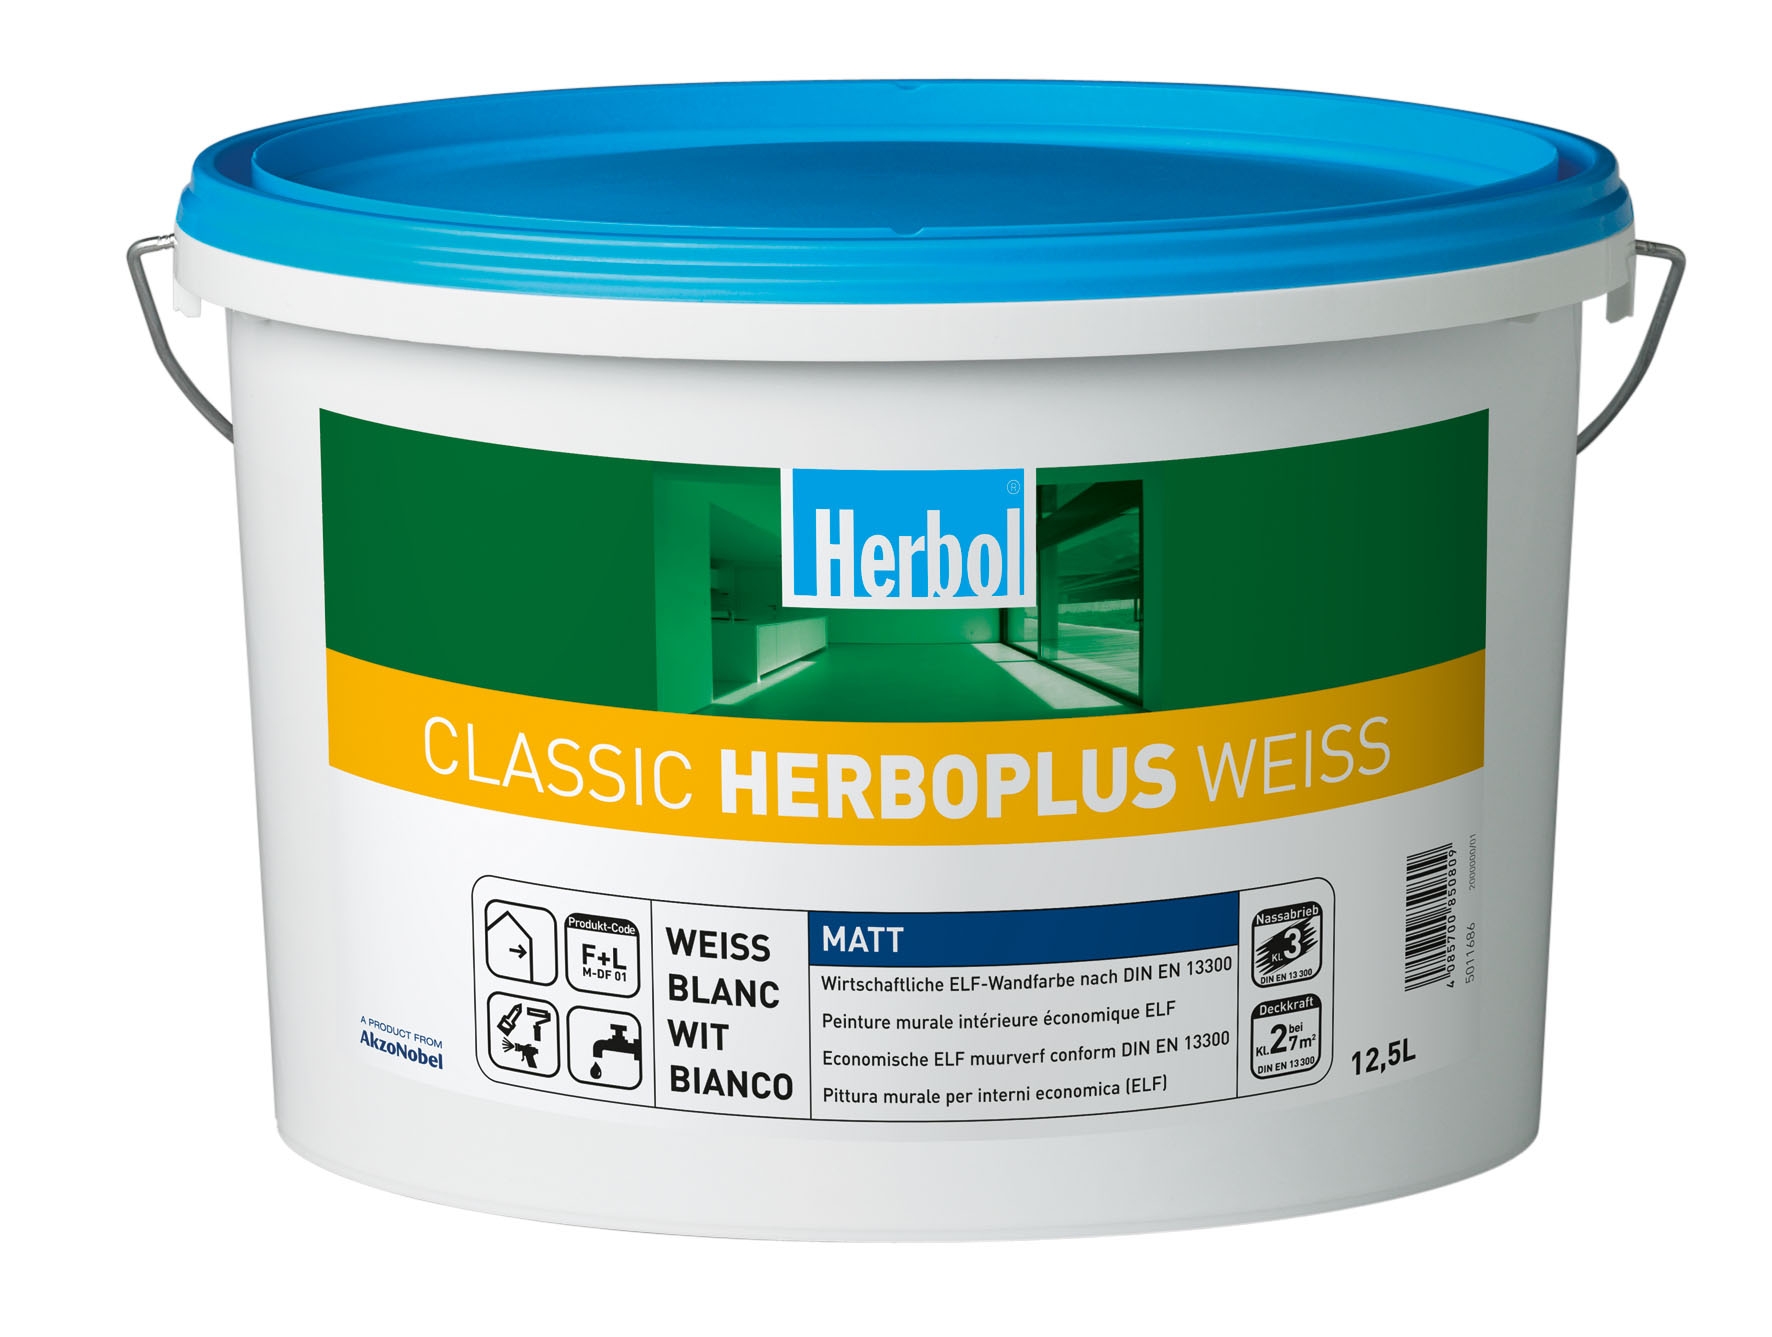 Bild: Herbol Herbo Plus 12,5 Liter Weiss